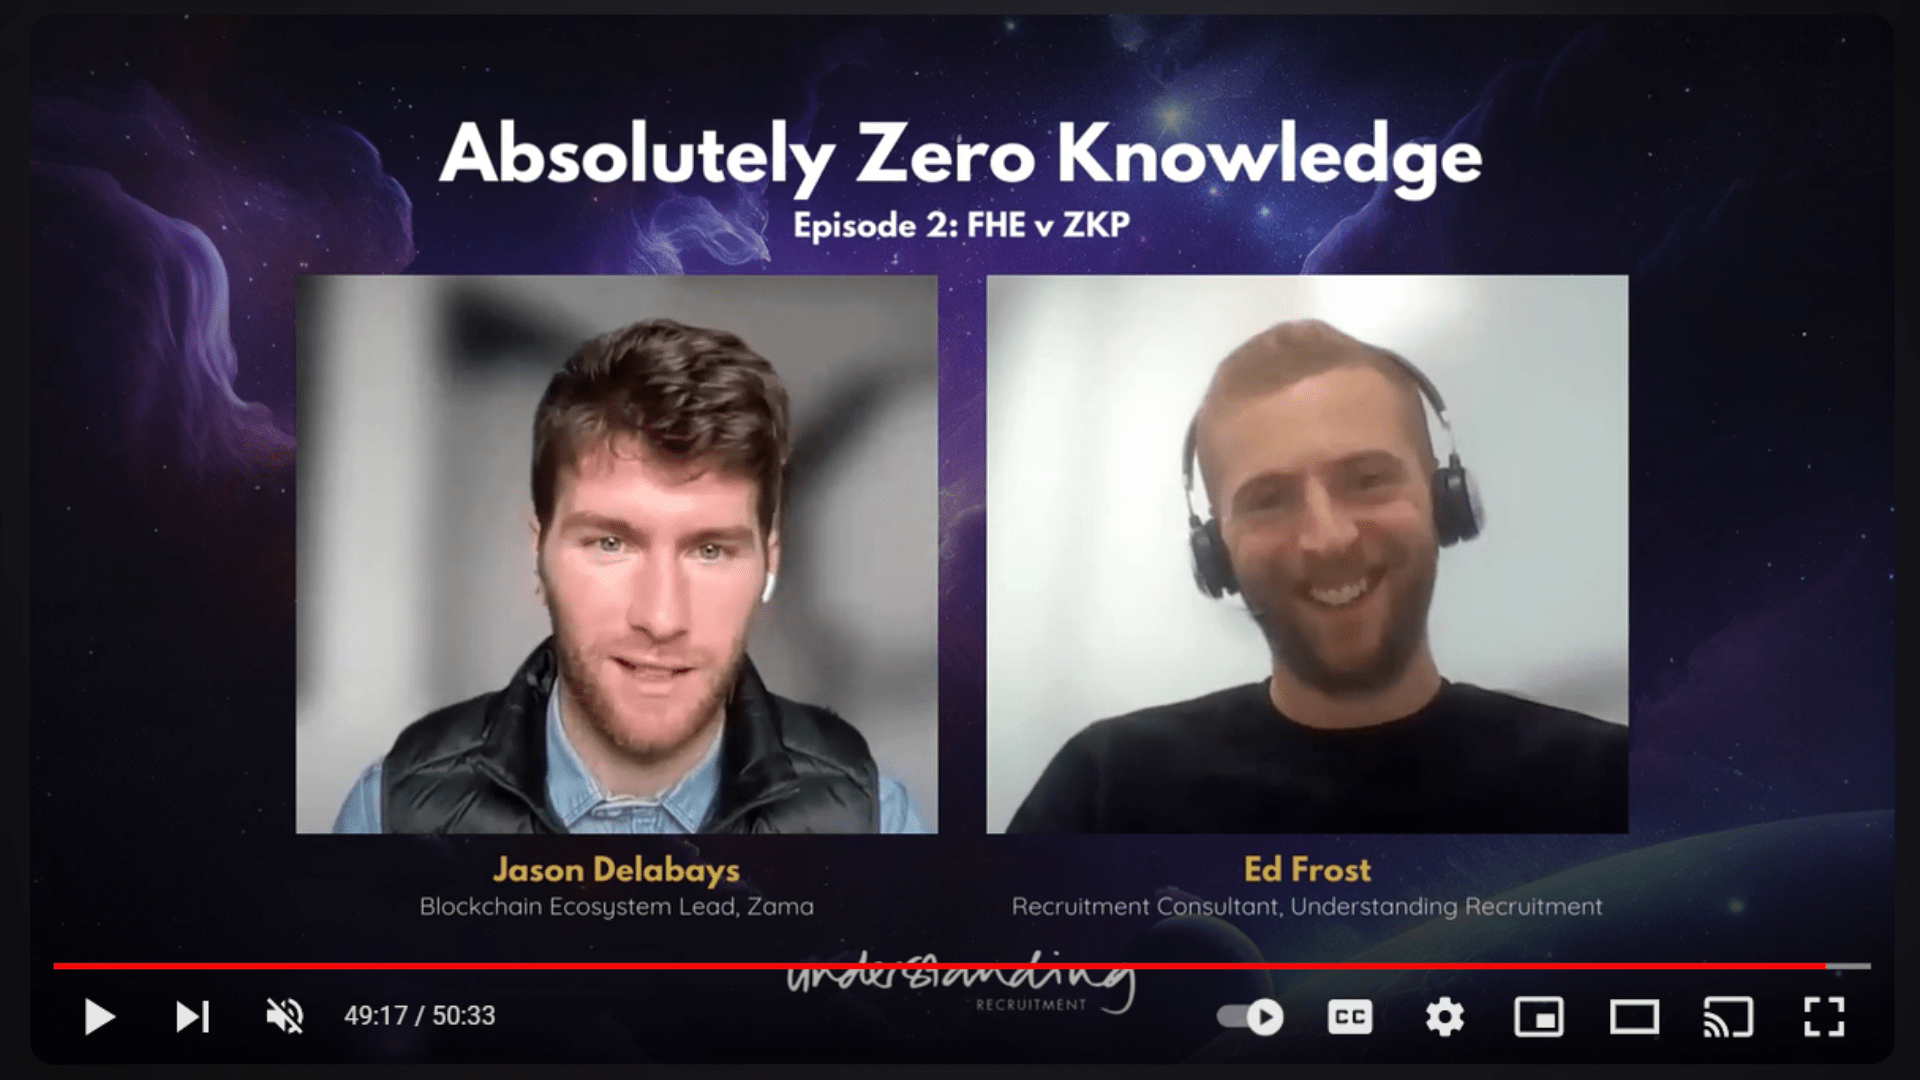 Absolutely Zero Knowledge Episode 2: Jason Delabays